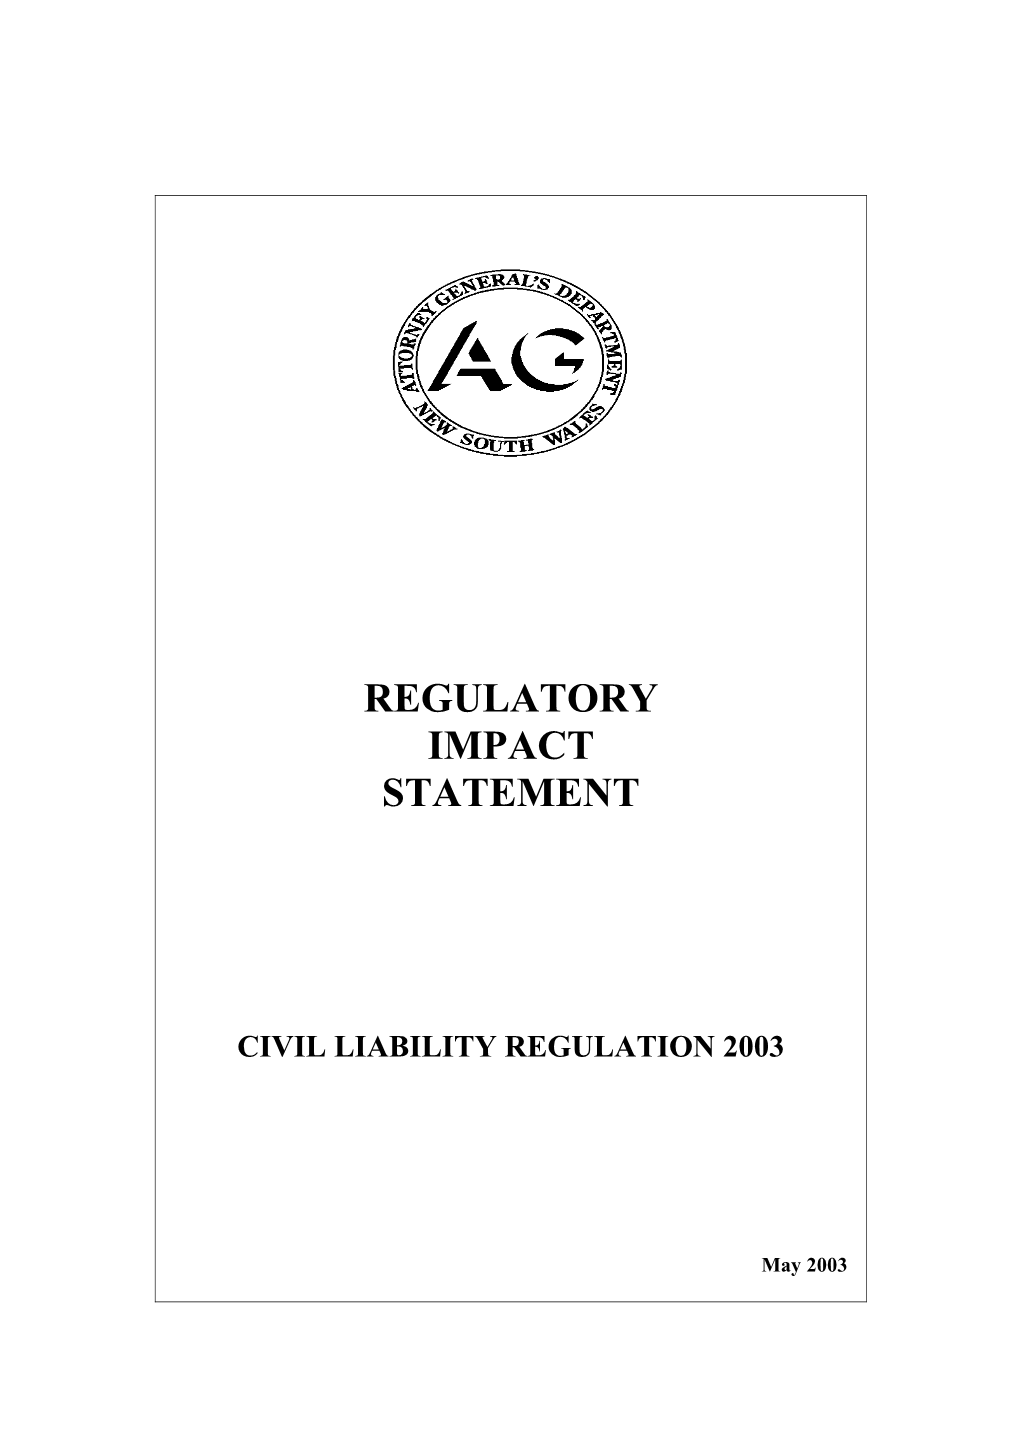 Civil Liability Regulation 2003